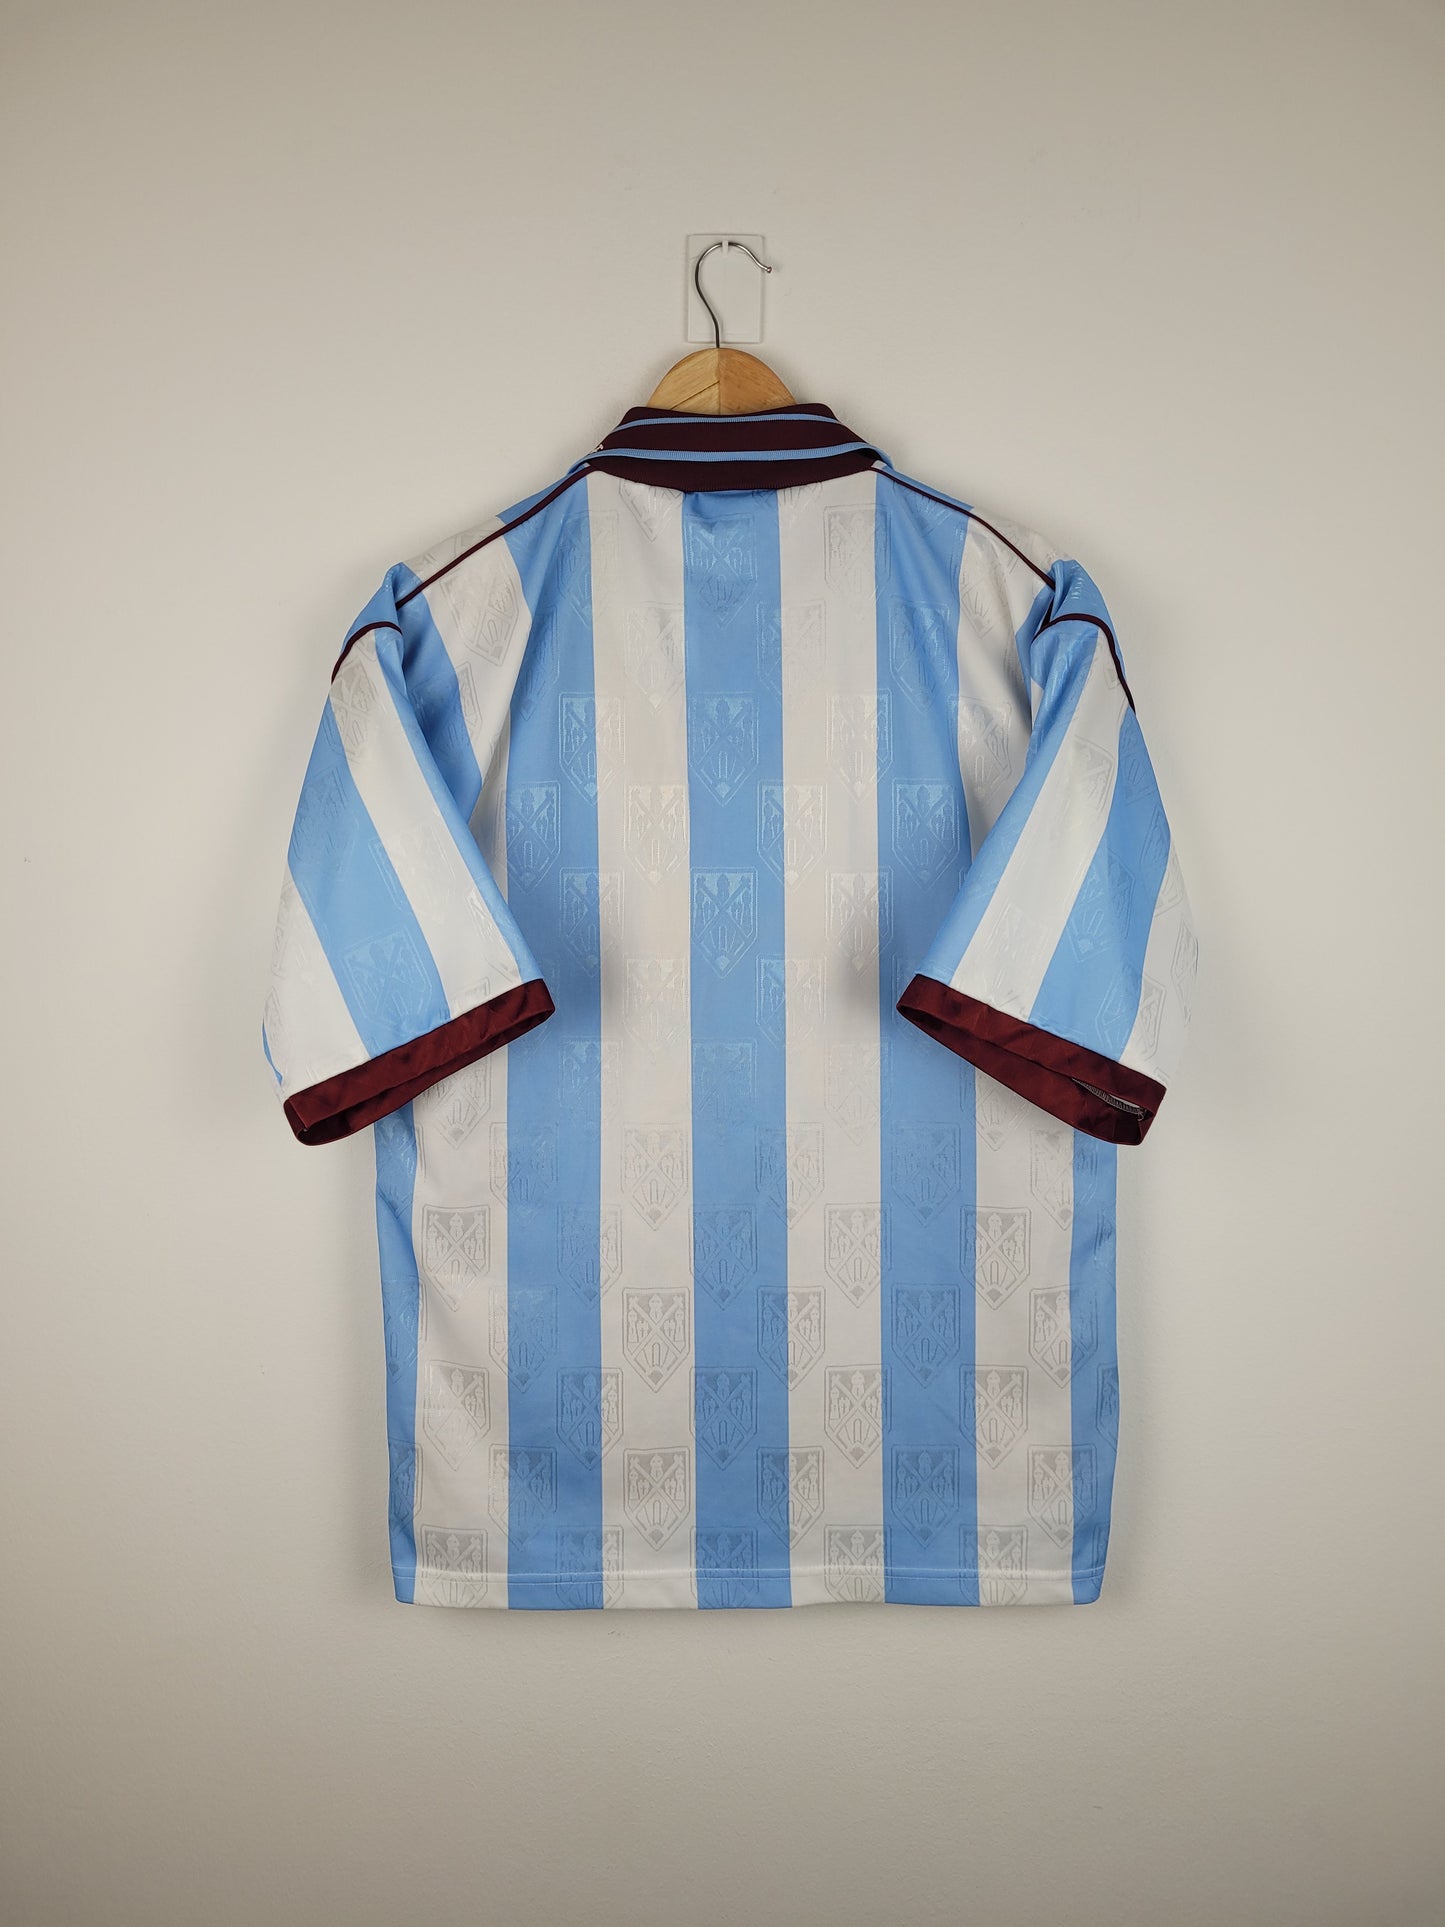 Tottenham Hotspur 1985-86 Retro Football Shirt | Vintage Football Club ®